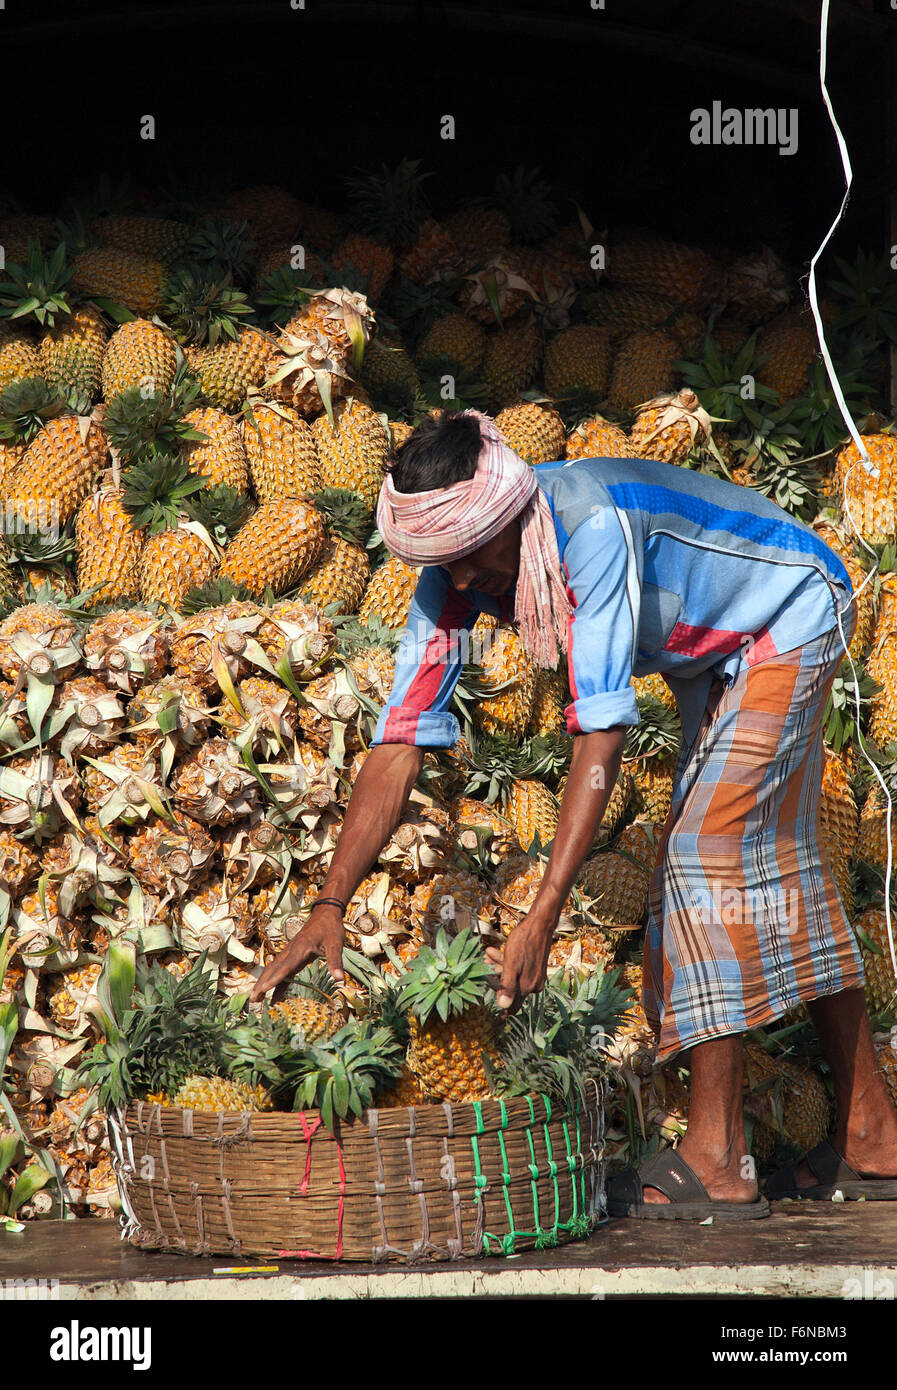 The image of Pineapple unloading was taken in Crawford market,  Mumbai, India Stock Photo